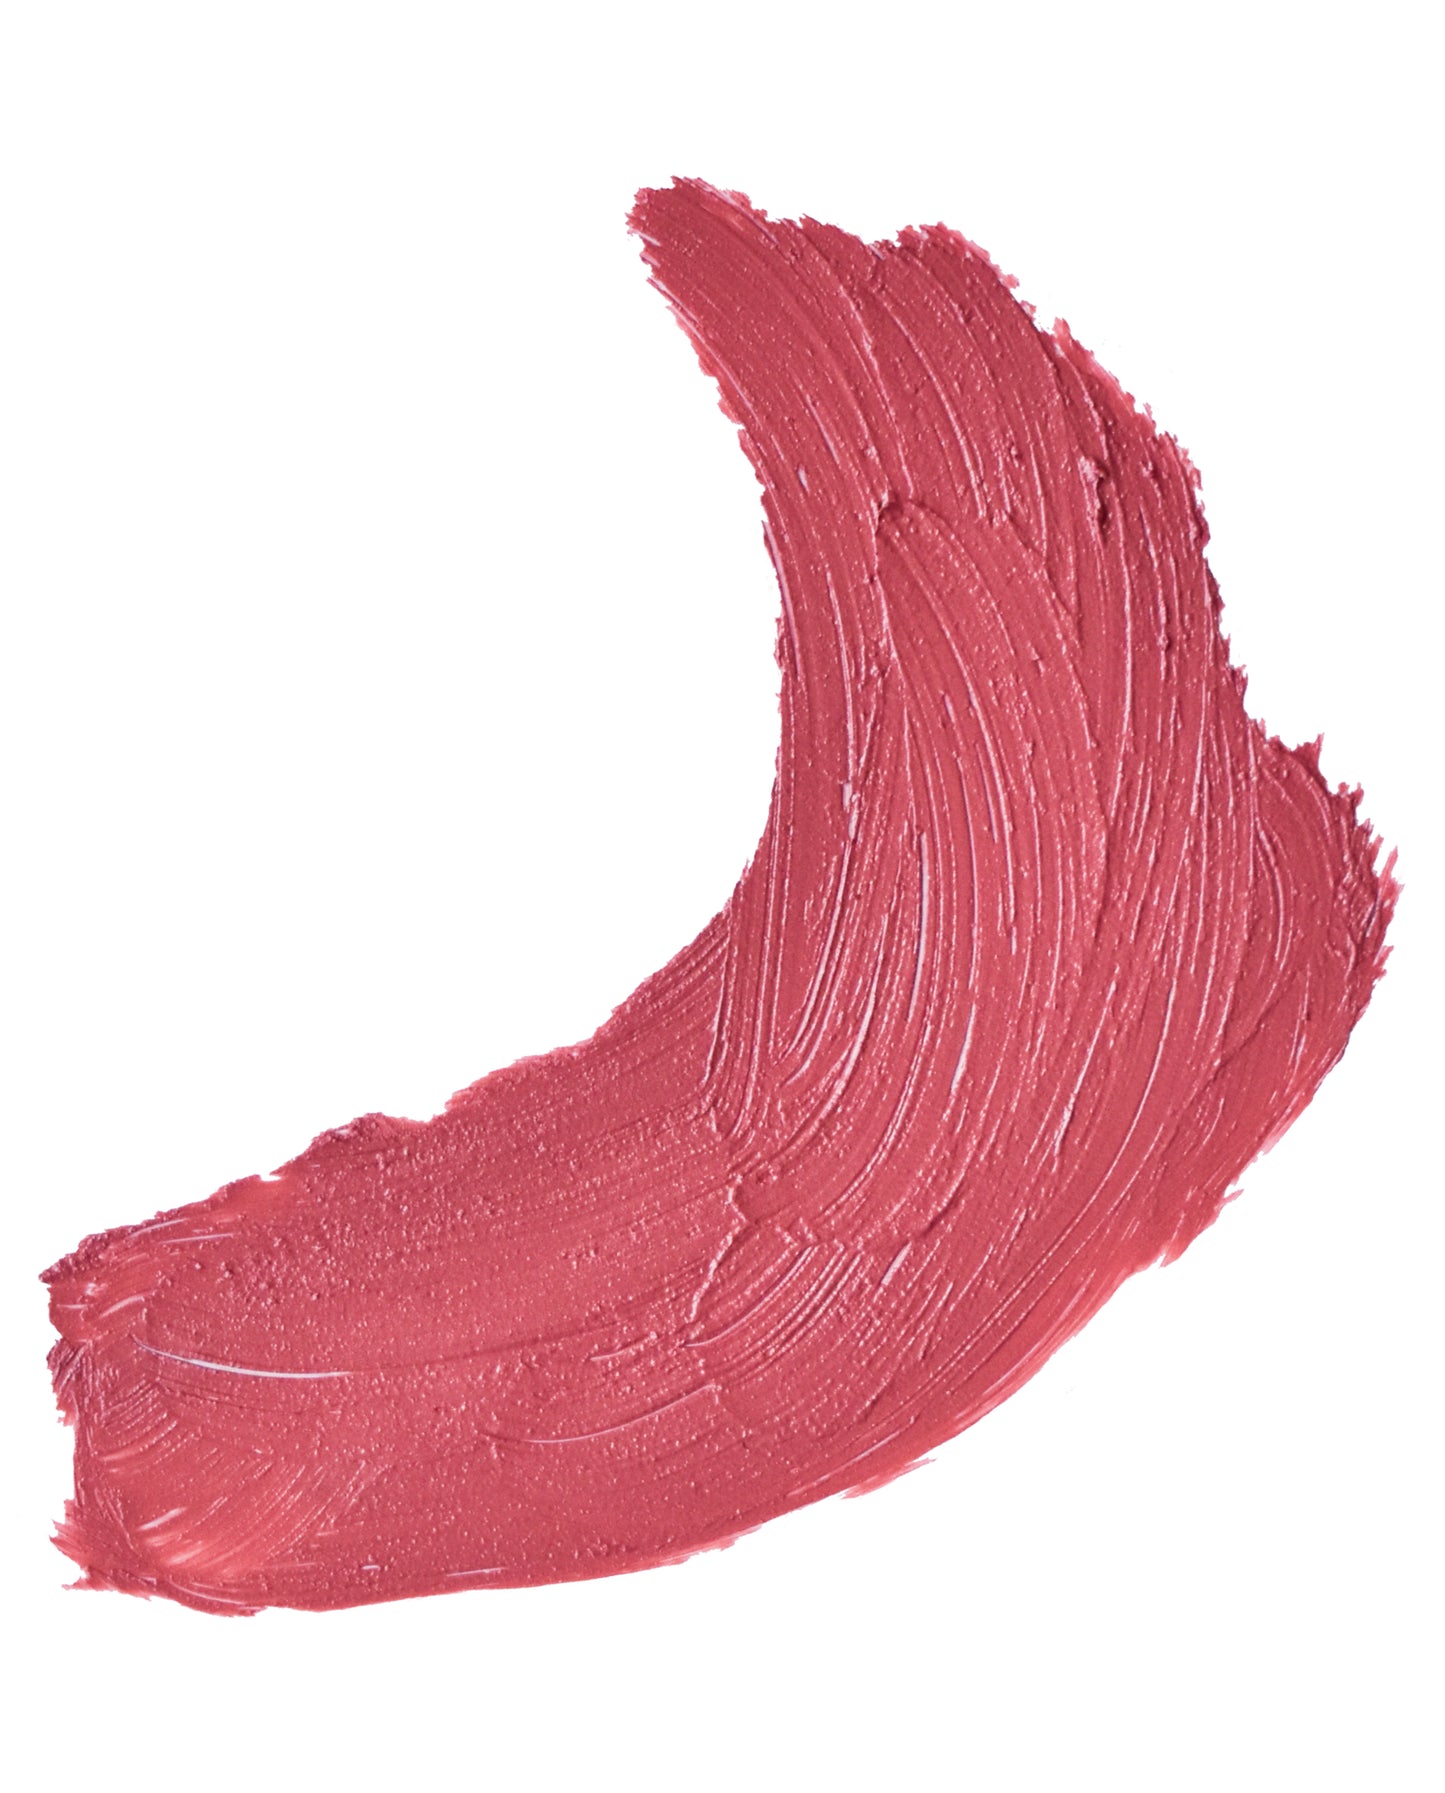 Dusk - Warm Dusky Pink Lipstick